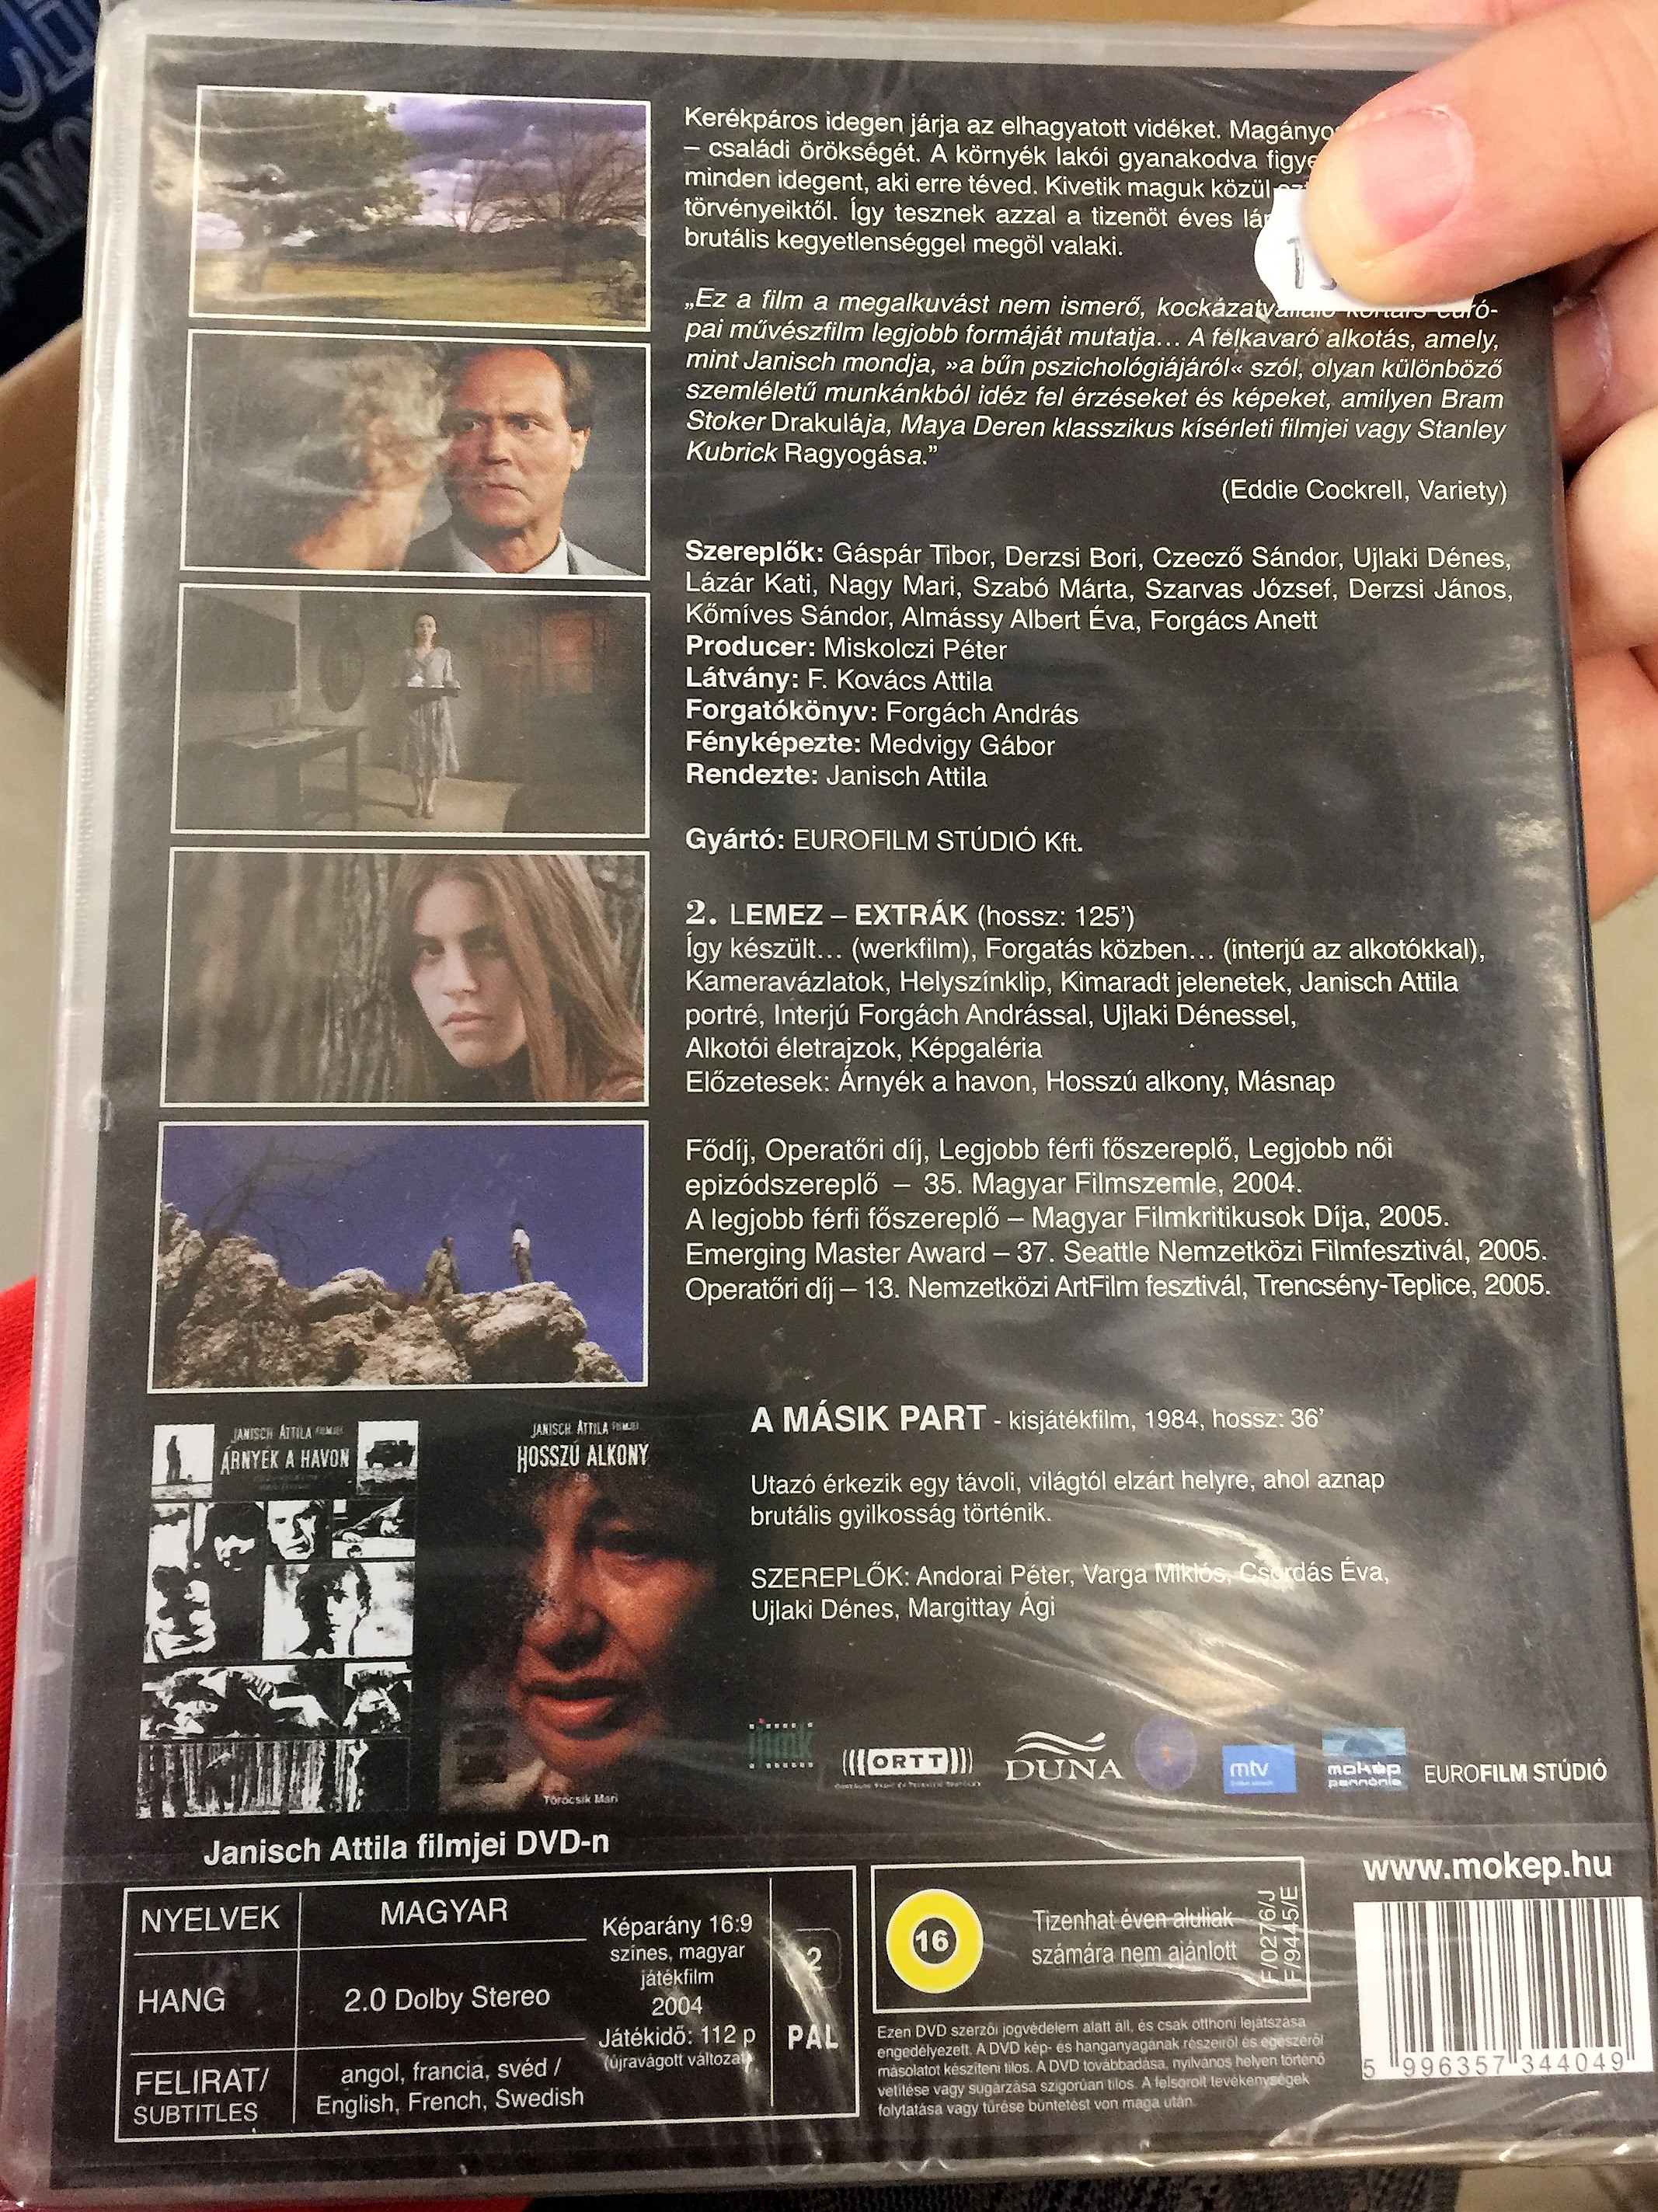 m-snap-dvd-2004-after-the-day-before-directed-by-janisch-attila-starring-g-sp-r-tibor-derzsi-bori-cecz-s-ndor-ujlaki-d-nes-2-dvd-bonus-short-movie-a-m-sik-part-2-.jpg